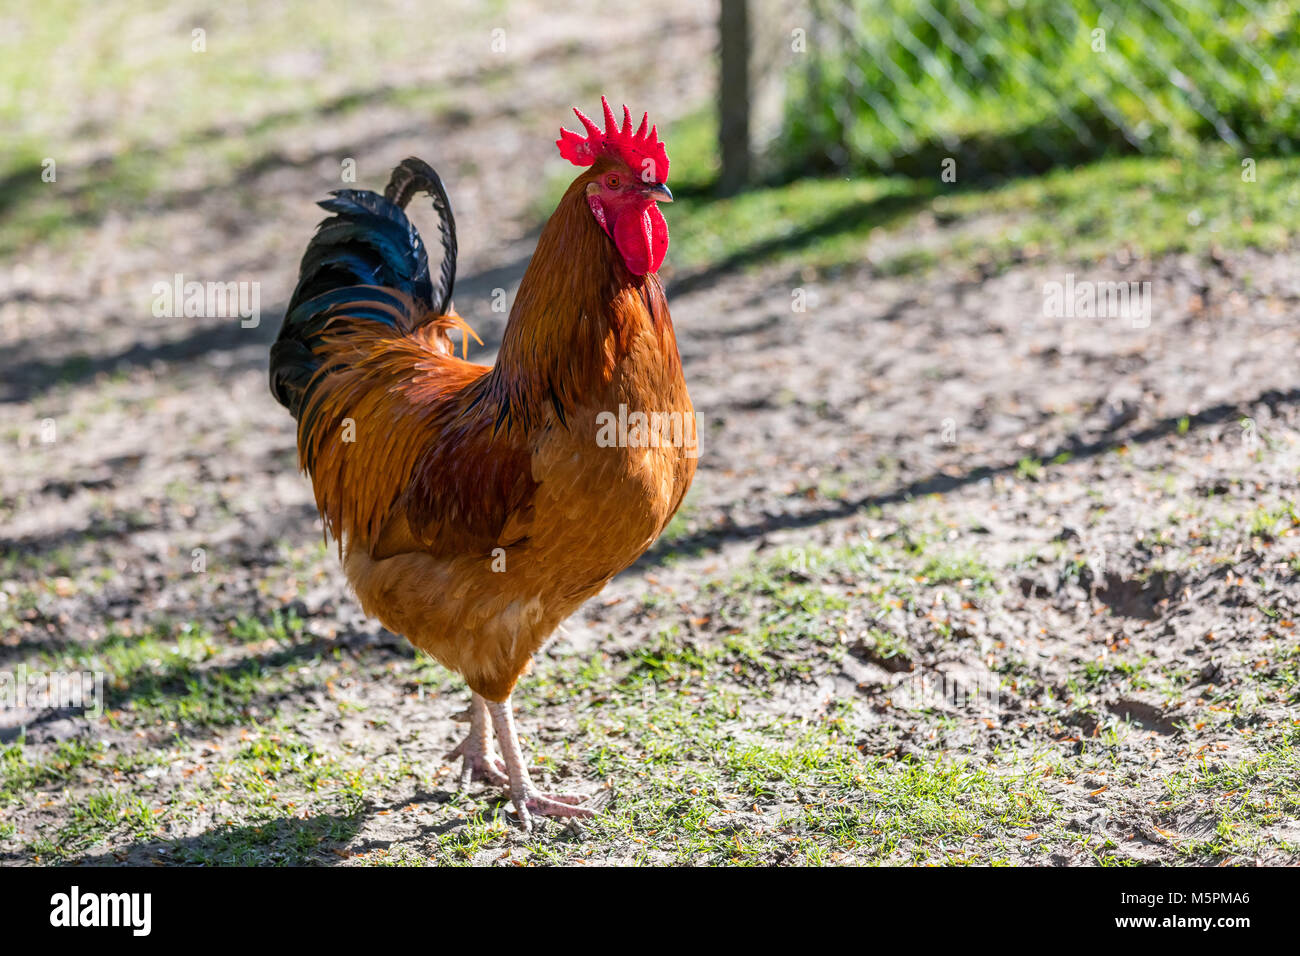 El orgulloso gallo de la granja Foto de stock